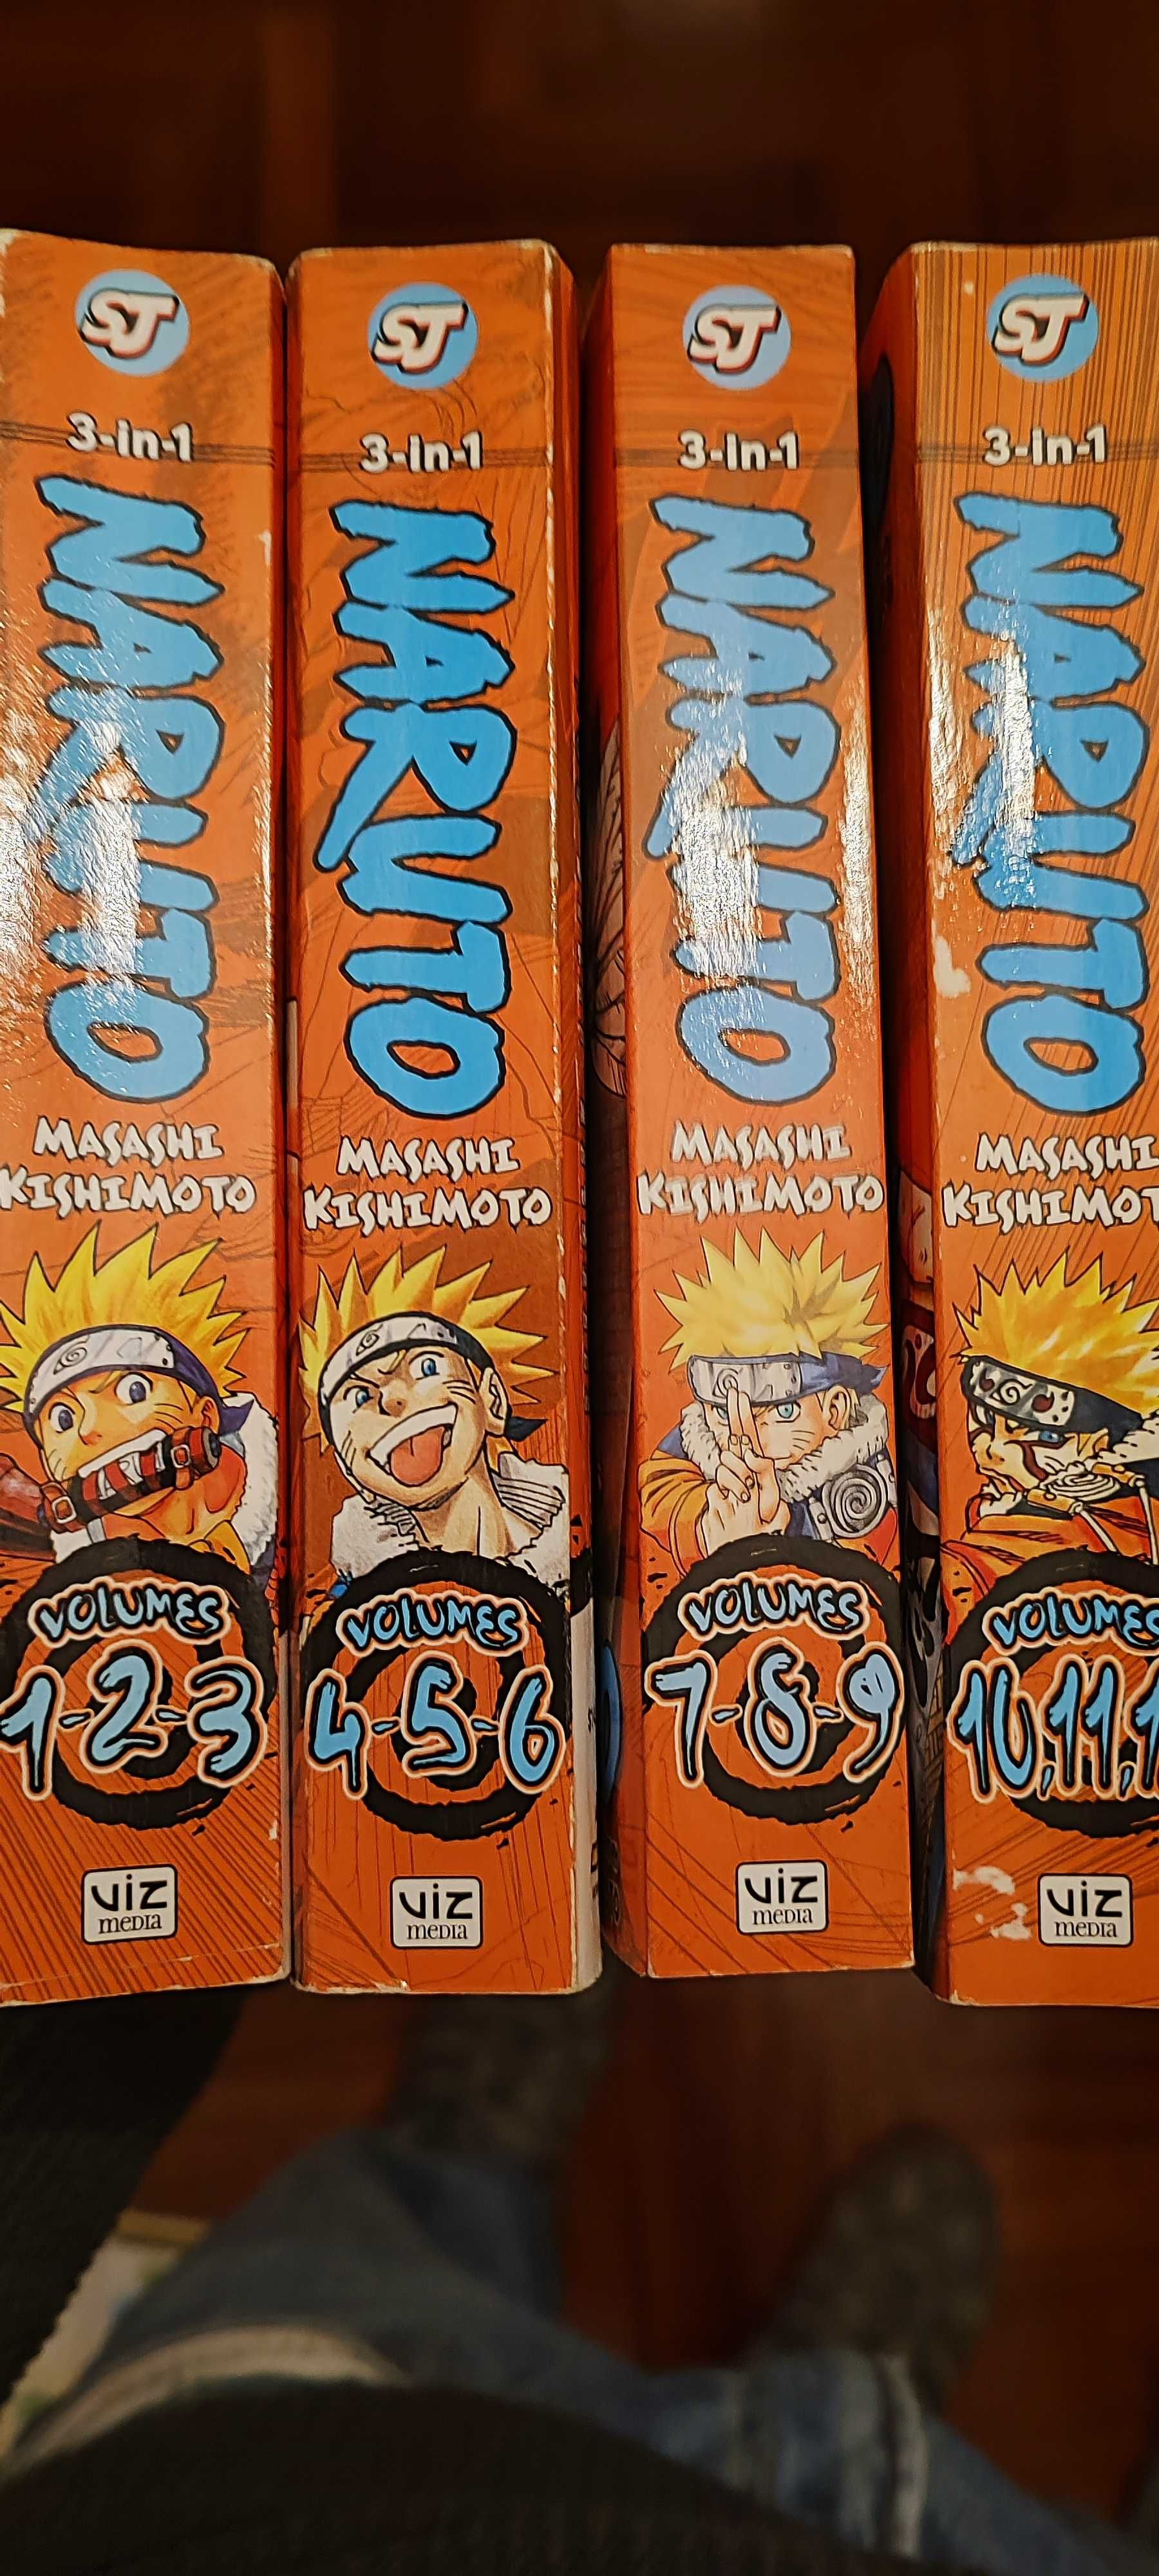 Manga Naruto 3 em 1 versão inglesa